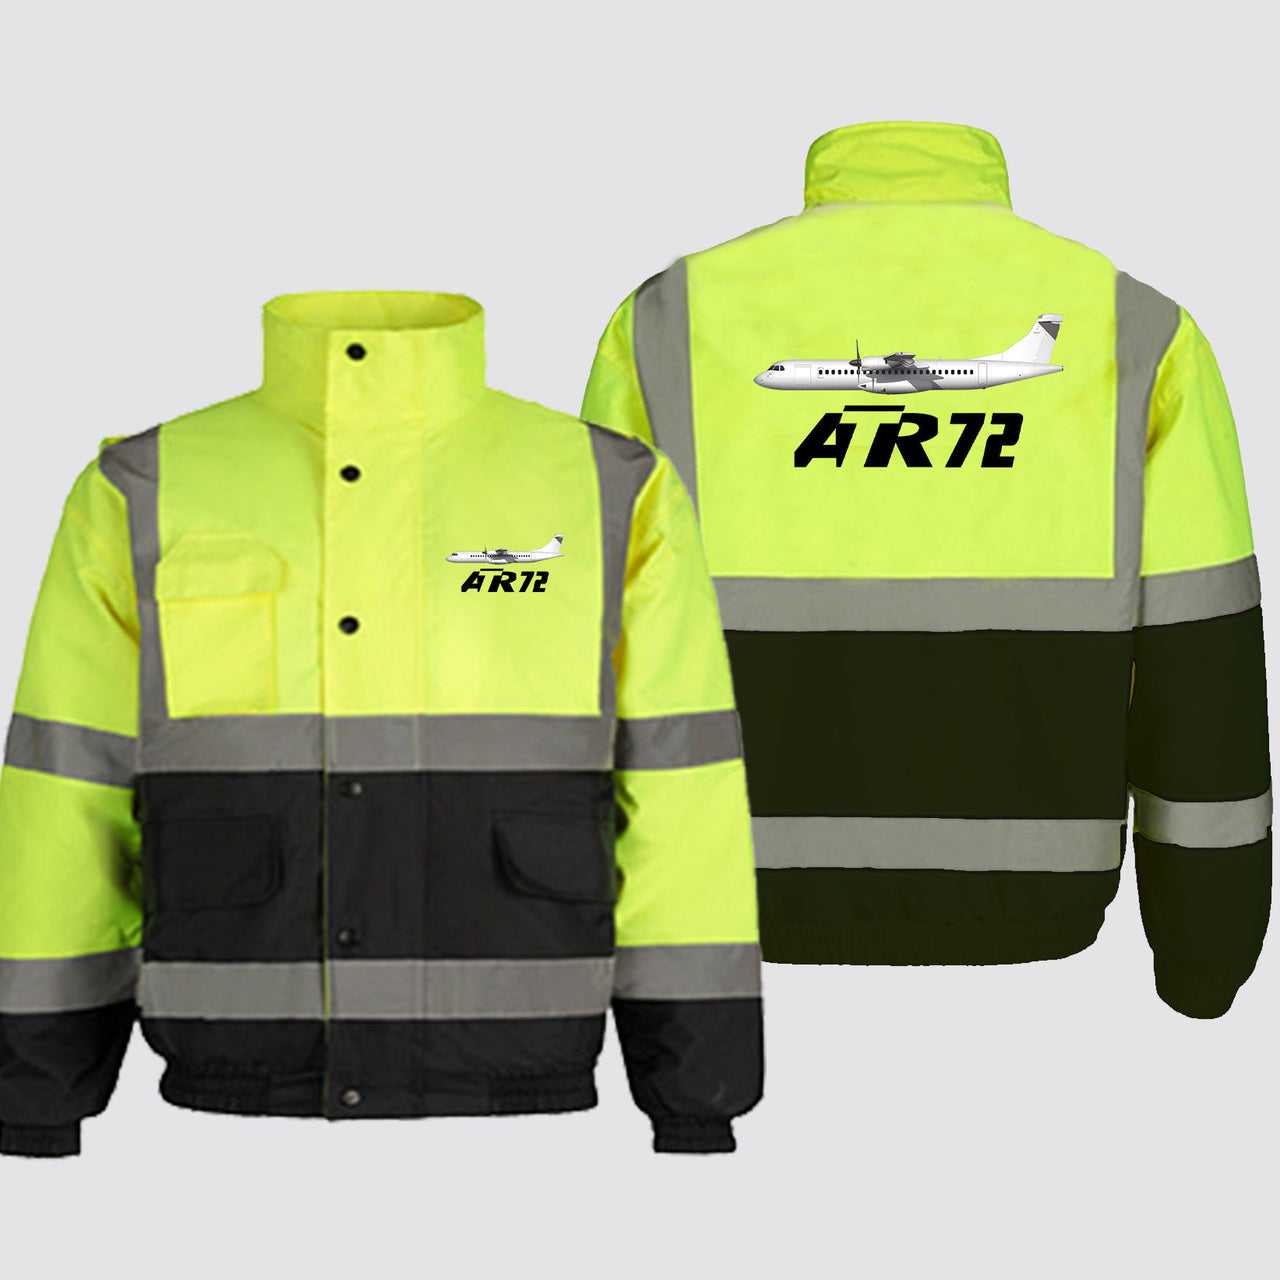 The ATR72 Designed Reflective Winter Jackets